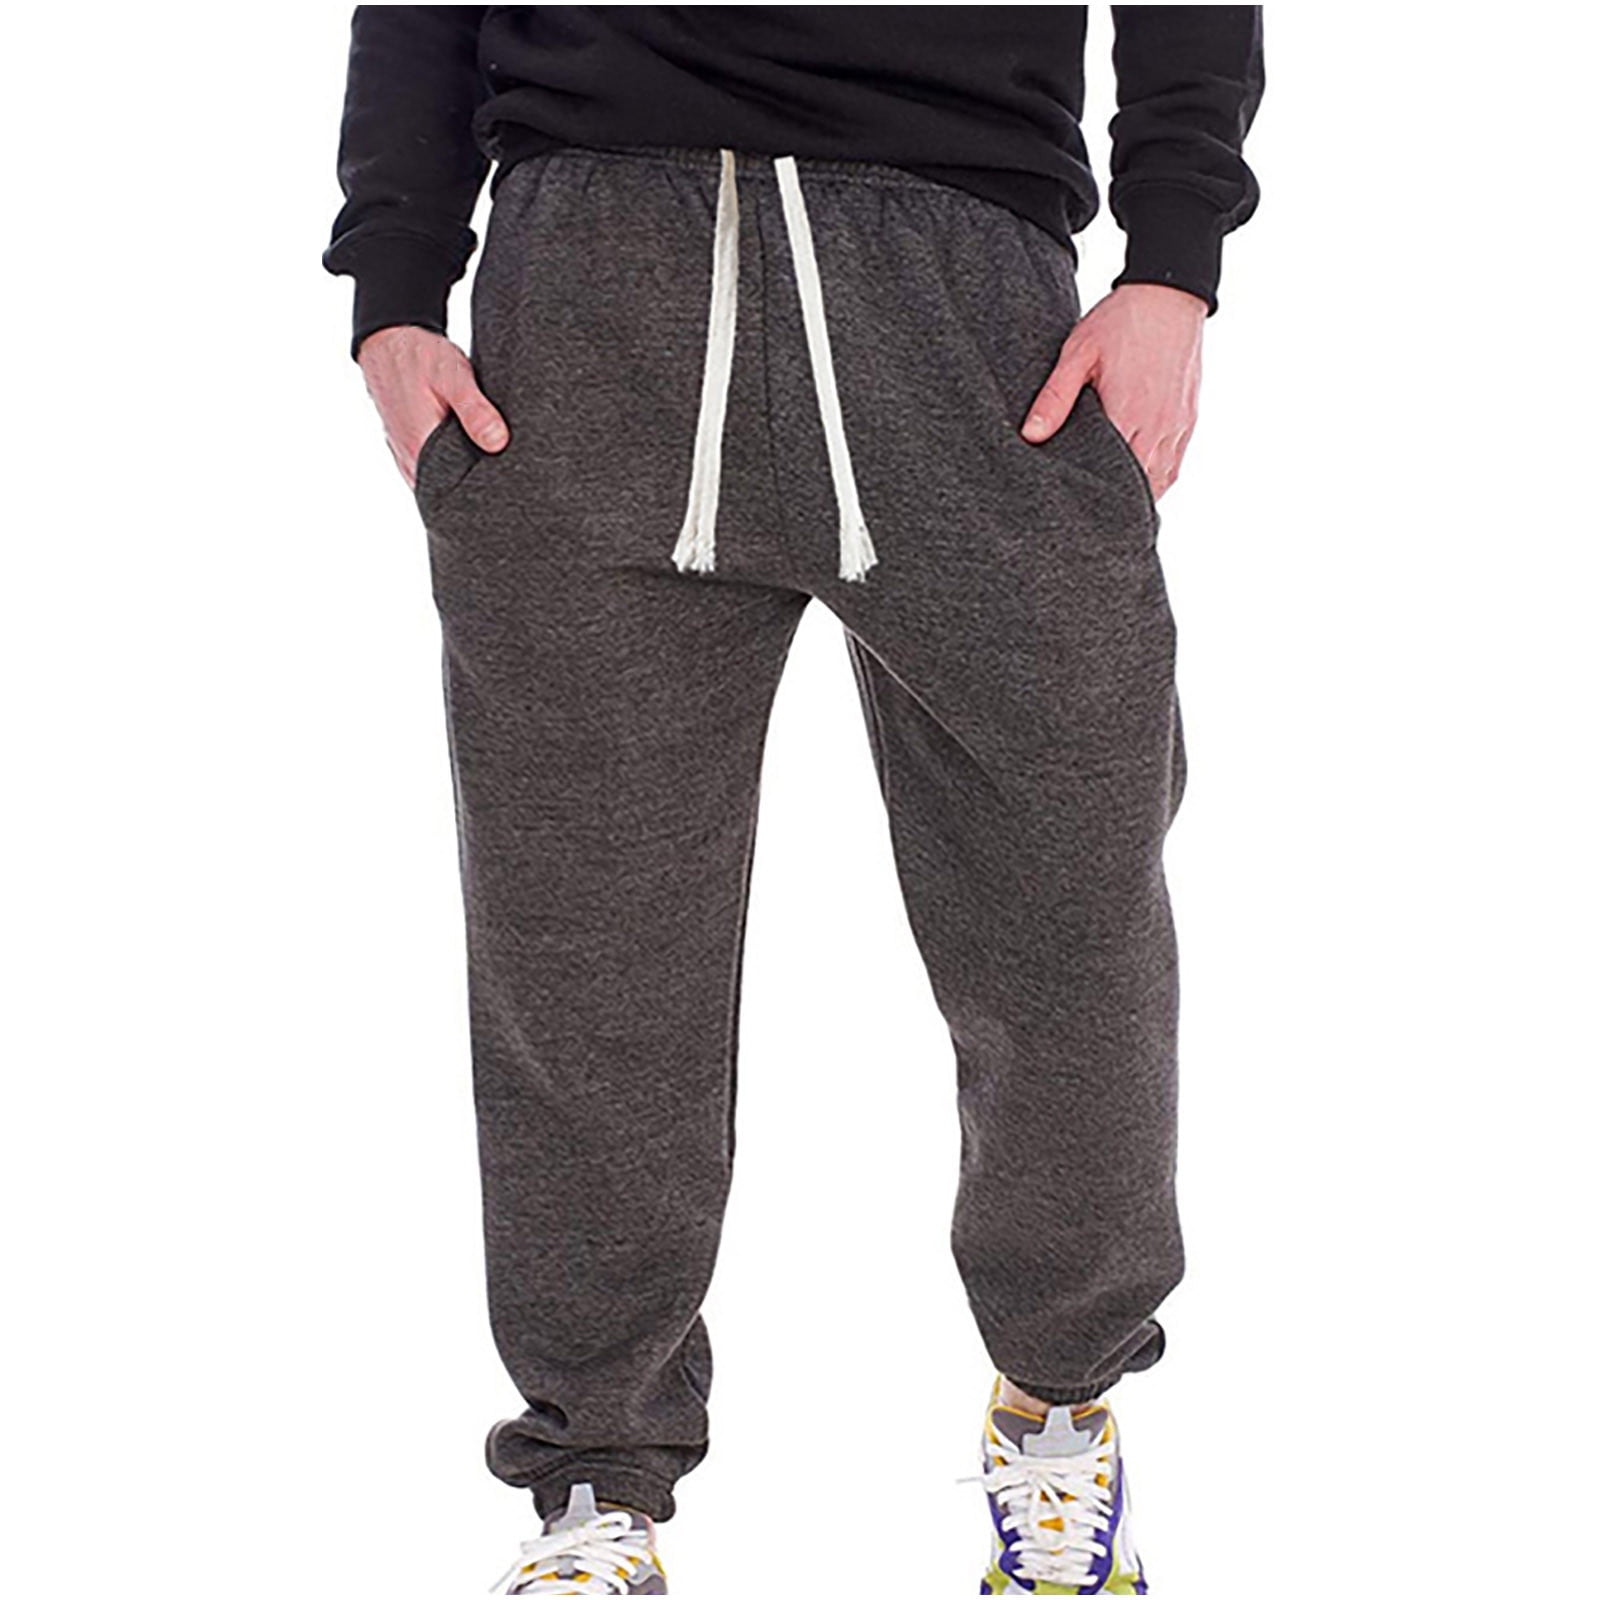  Taekwondo Dad Sweatpants for Men Joggers with Pockets Cotton  Pants Sizes M-3xl Autumn Winter Long Casual Pants : Sports & Outdoors